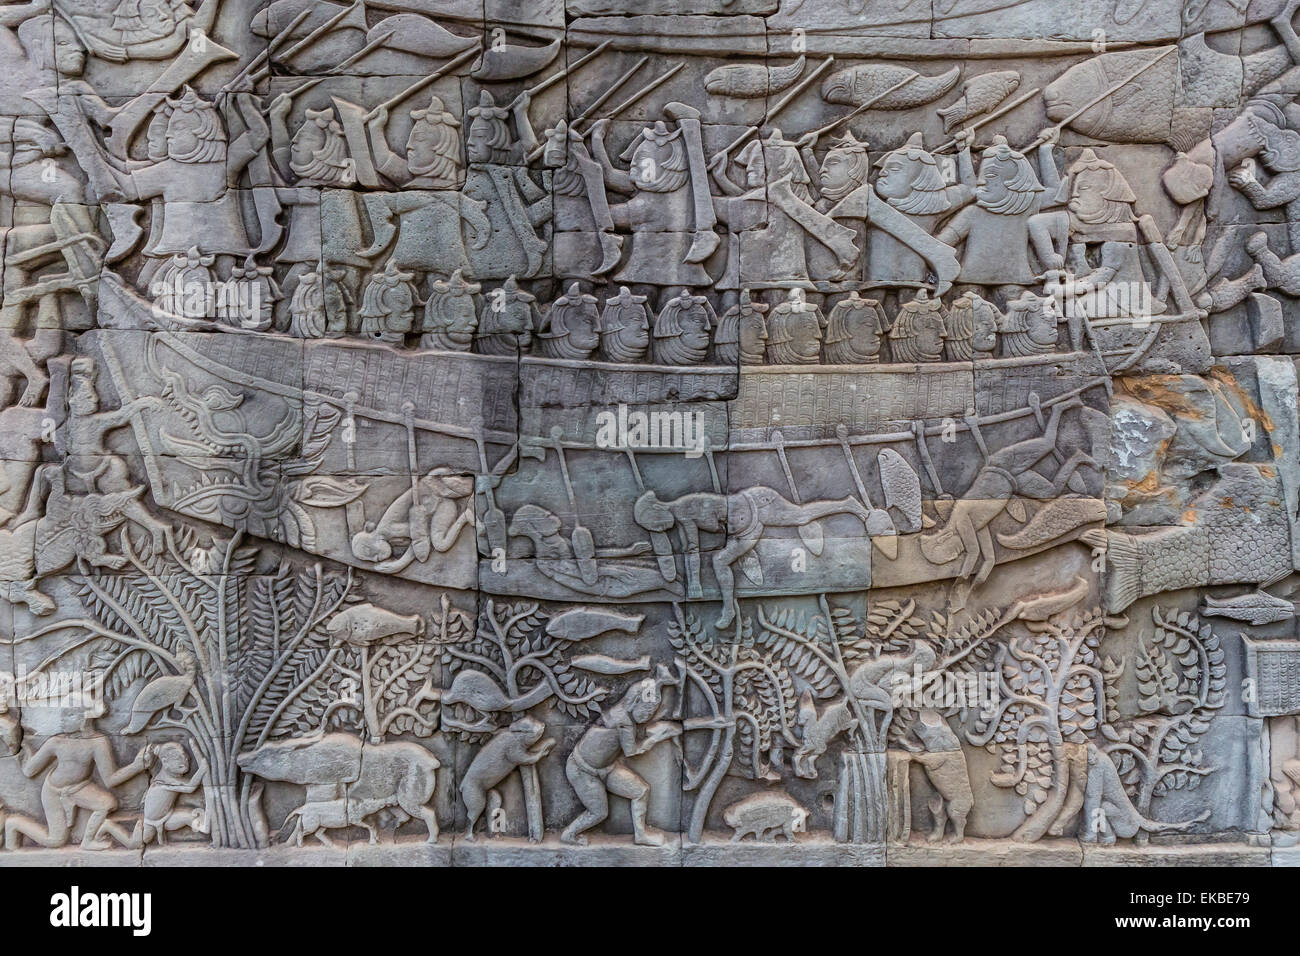 Bas-reliefs dans le Prasat du Bayon, Angkor Thom, Angkor, l'UNESCO, Siem Reap, Cambodge, Indochine, Asie du Sud, Asie Banque D'Images